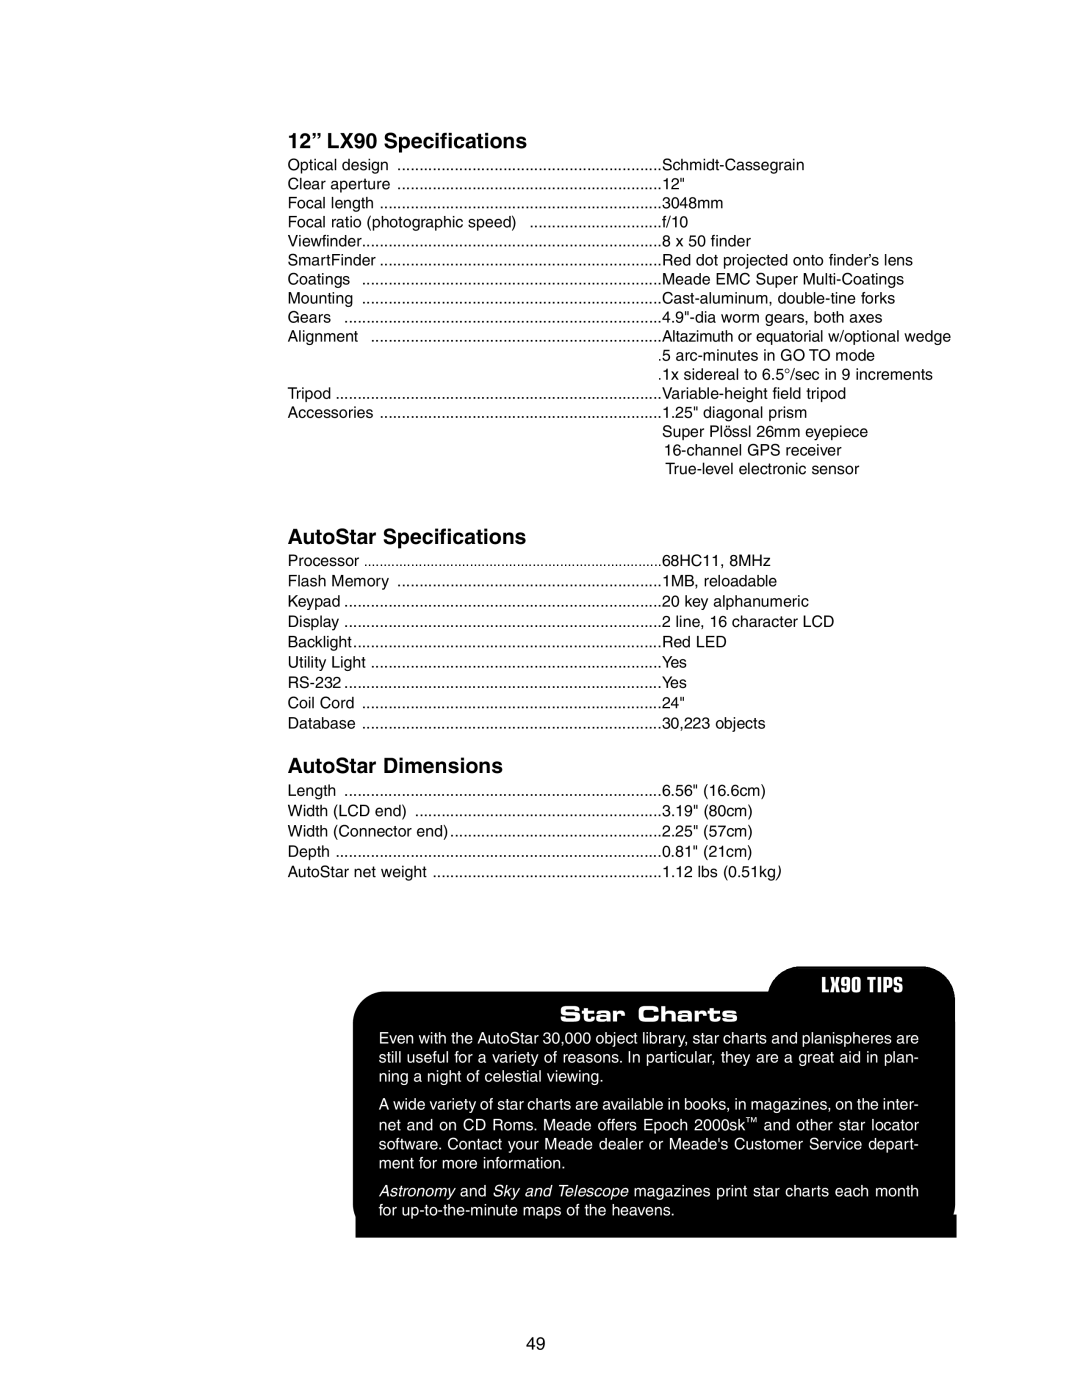 Meade LX90GPS 12” LX90 Specifications, AutoStar Specifications, AutoStar Dimensions, LX90 TIPS Star Charts 